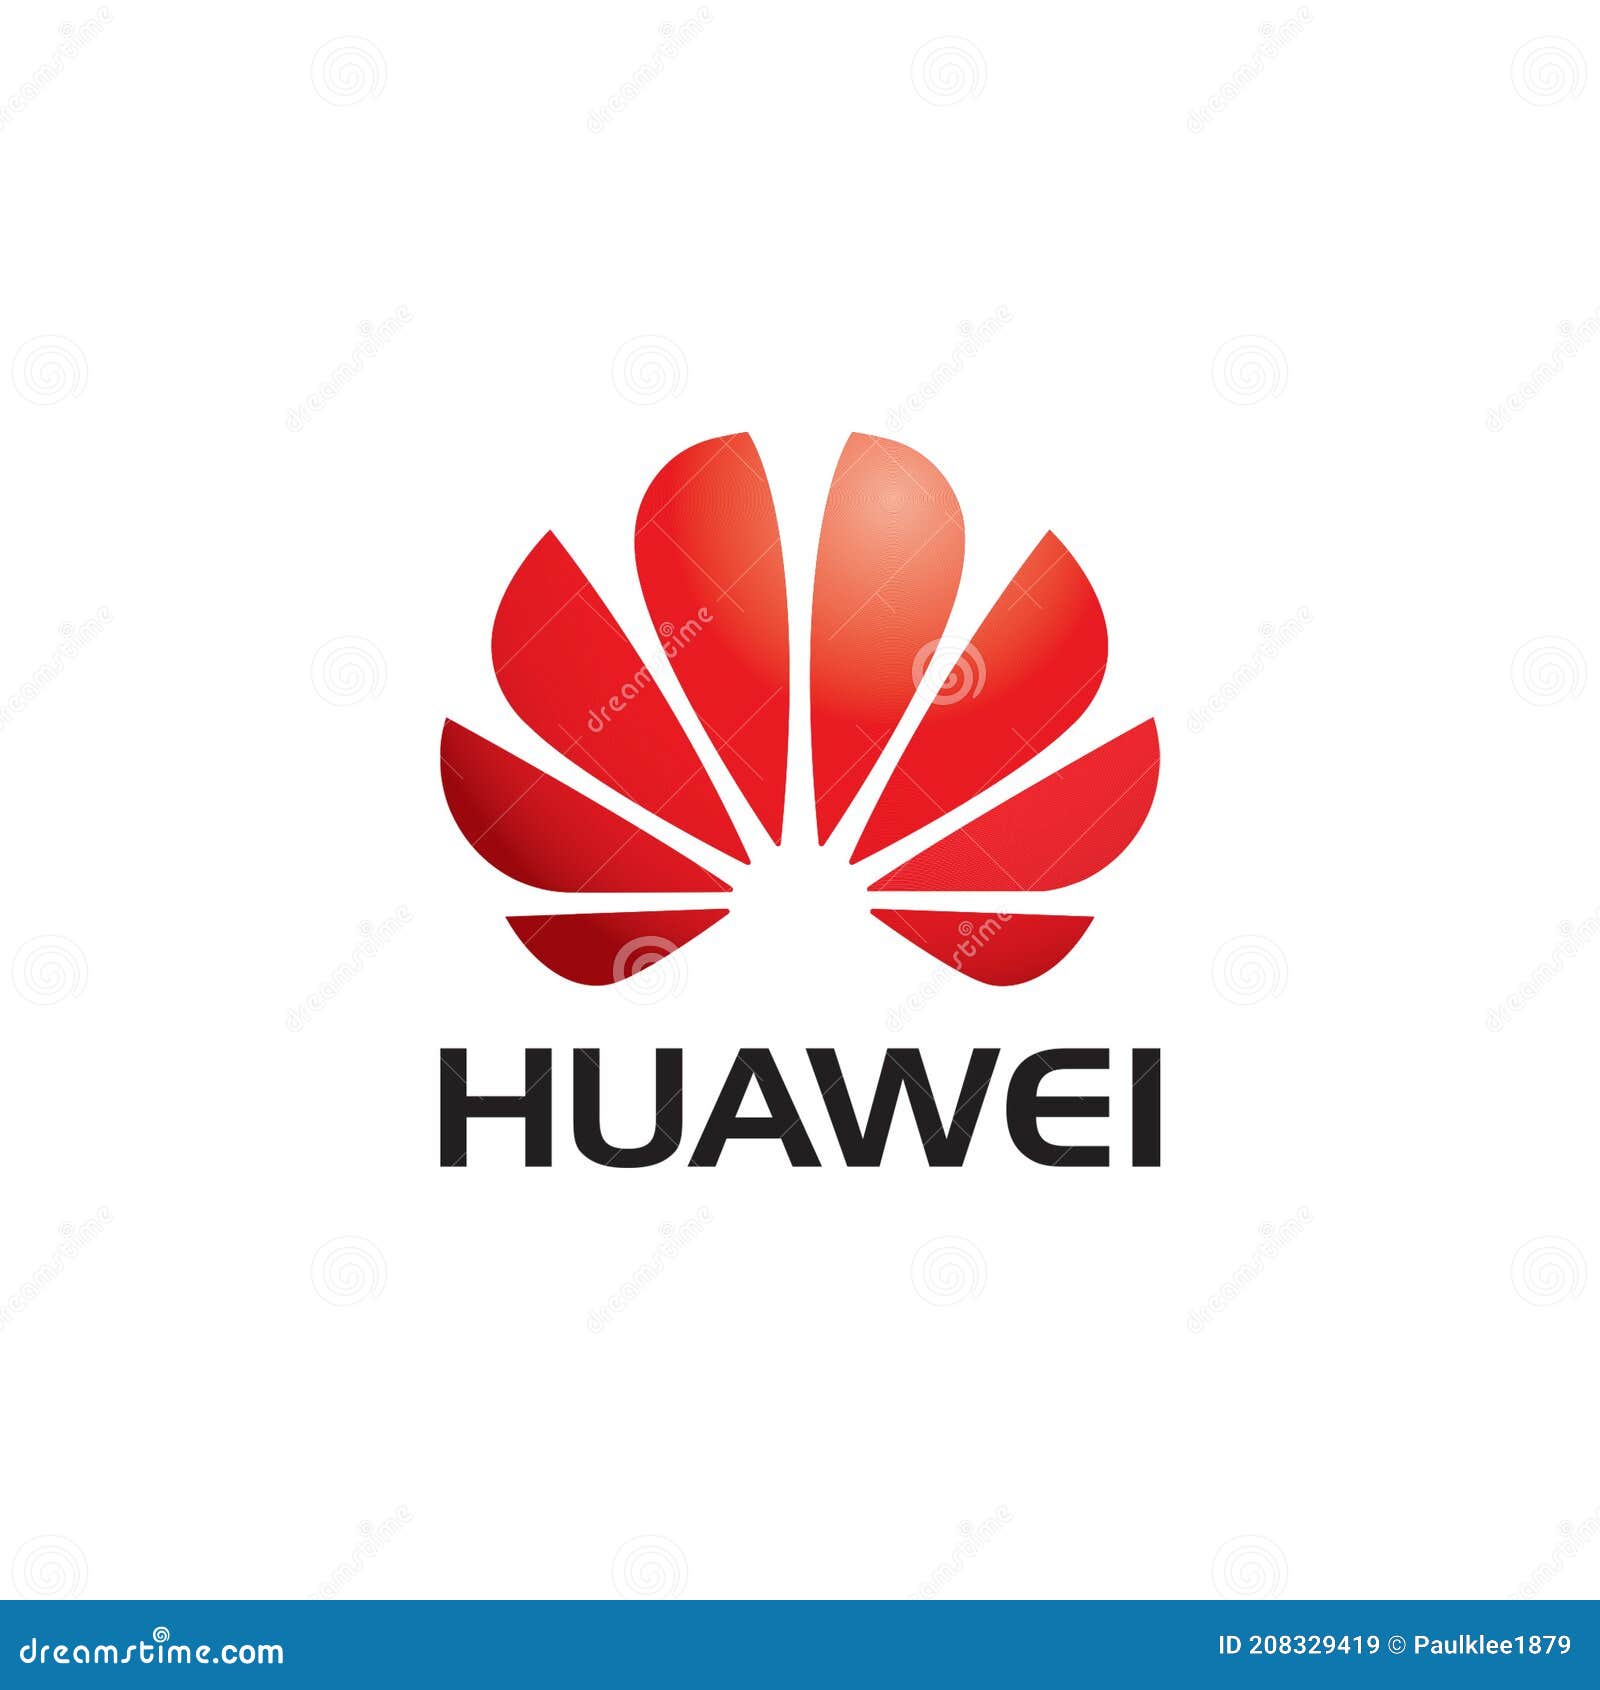 Huawei Logo Vector Illustration | CartoonDealer.com #122264998